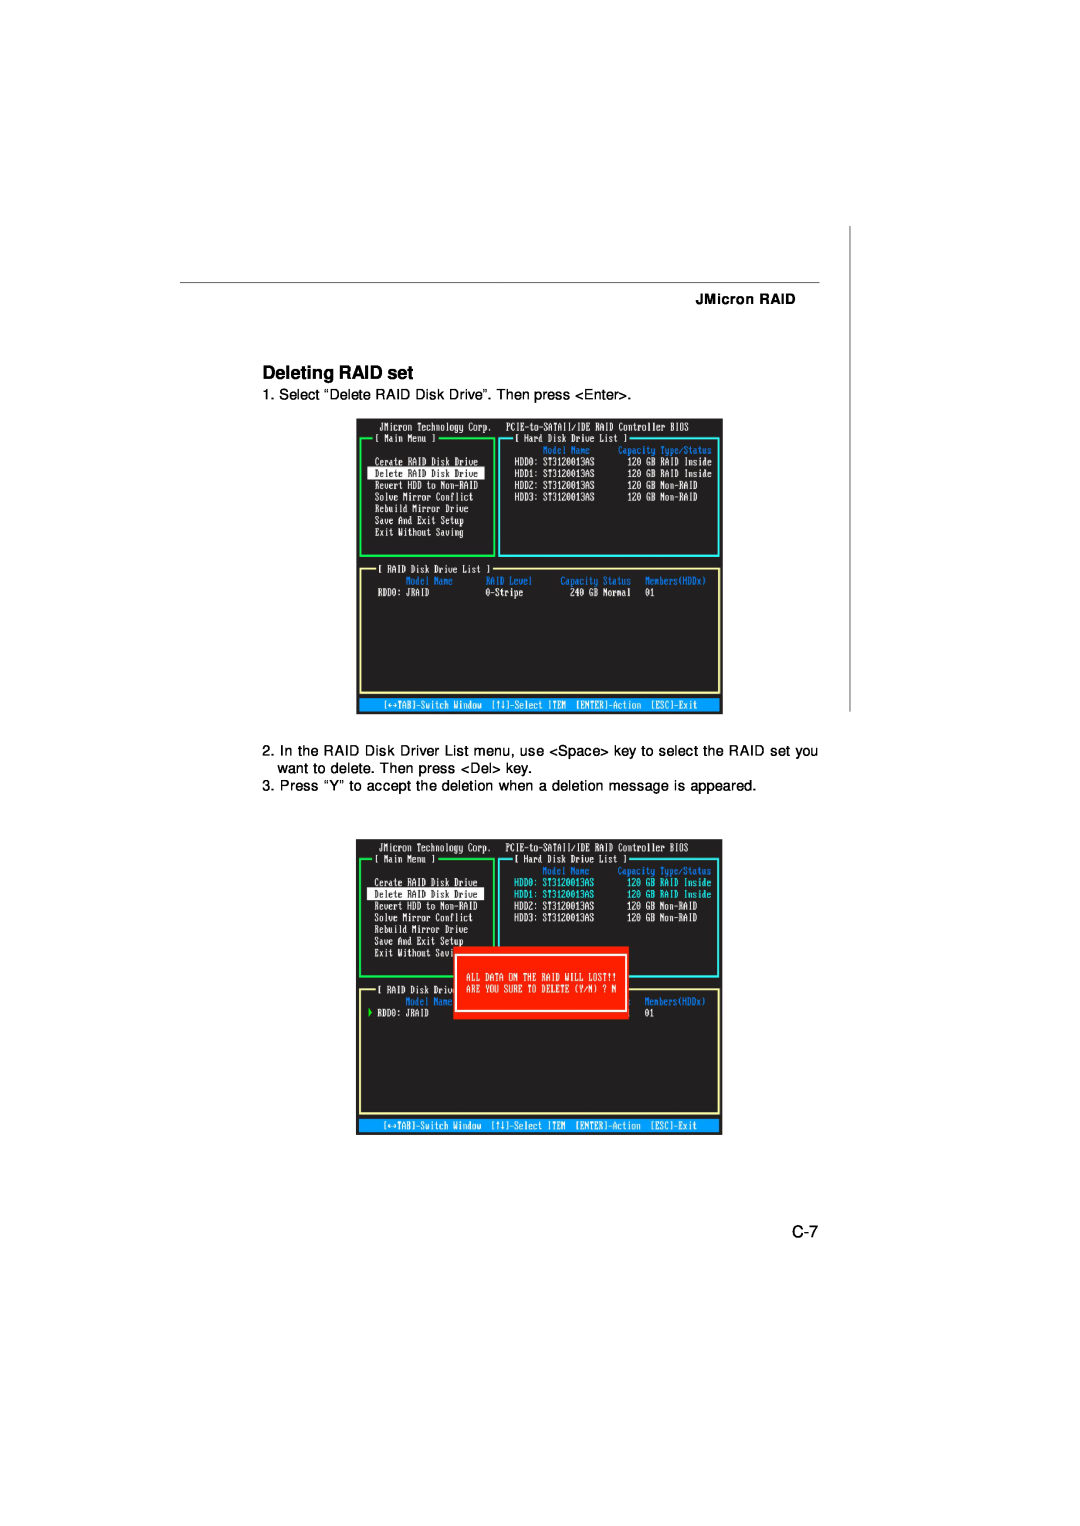 Nvidia MS-7374 manual Deleting RAID set, JMicron RAID 